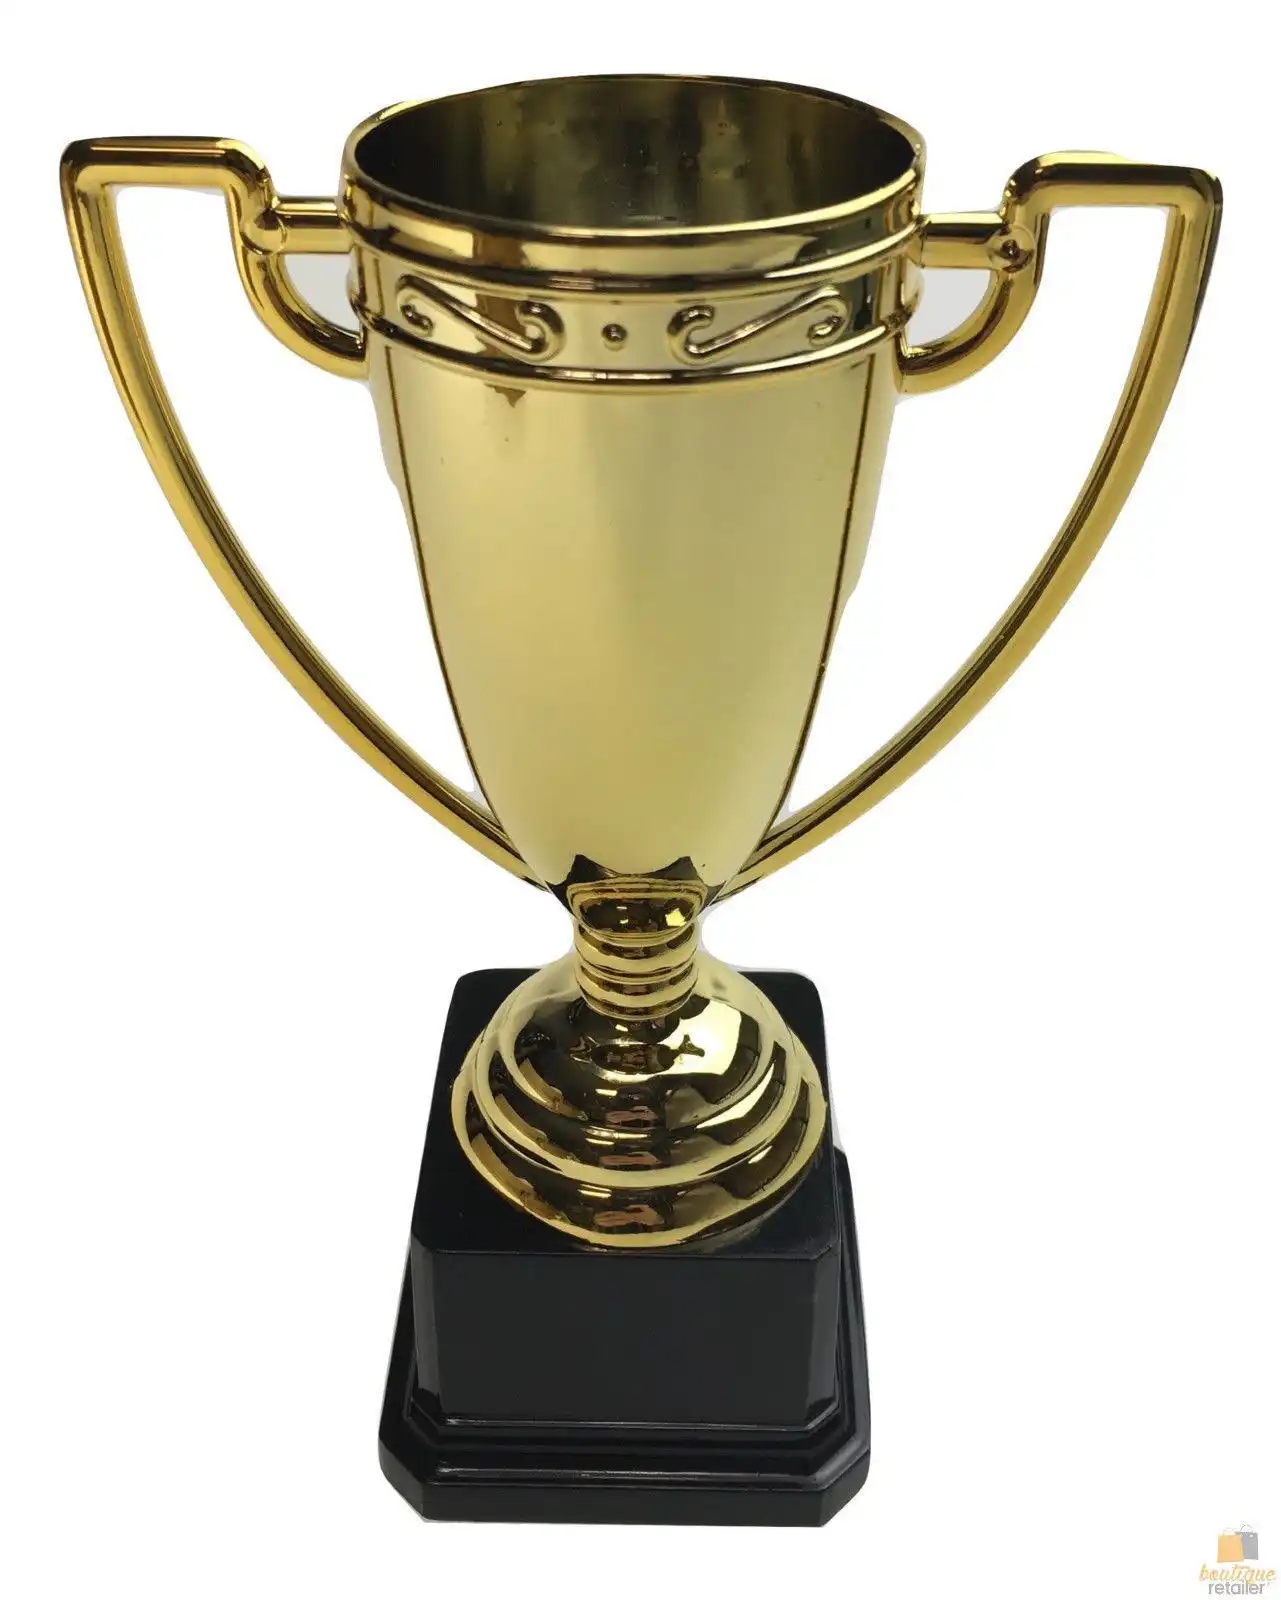 TROPHY CUP Sport Award Football School Table Tennis Gold Winner Achievement